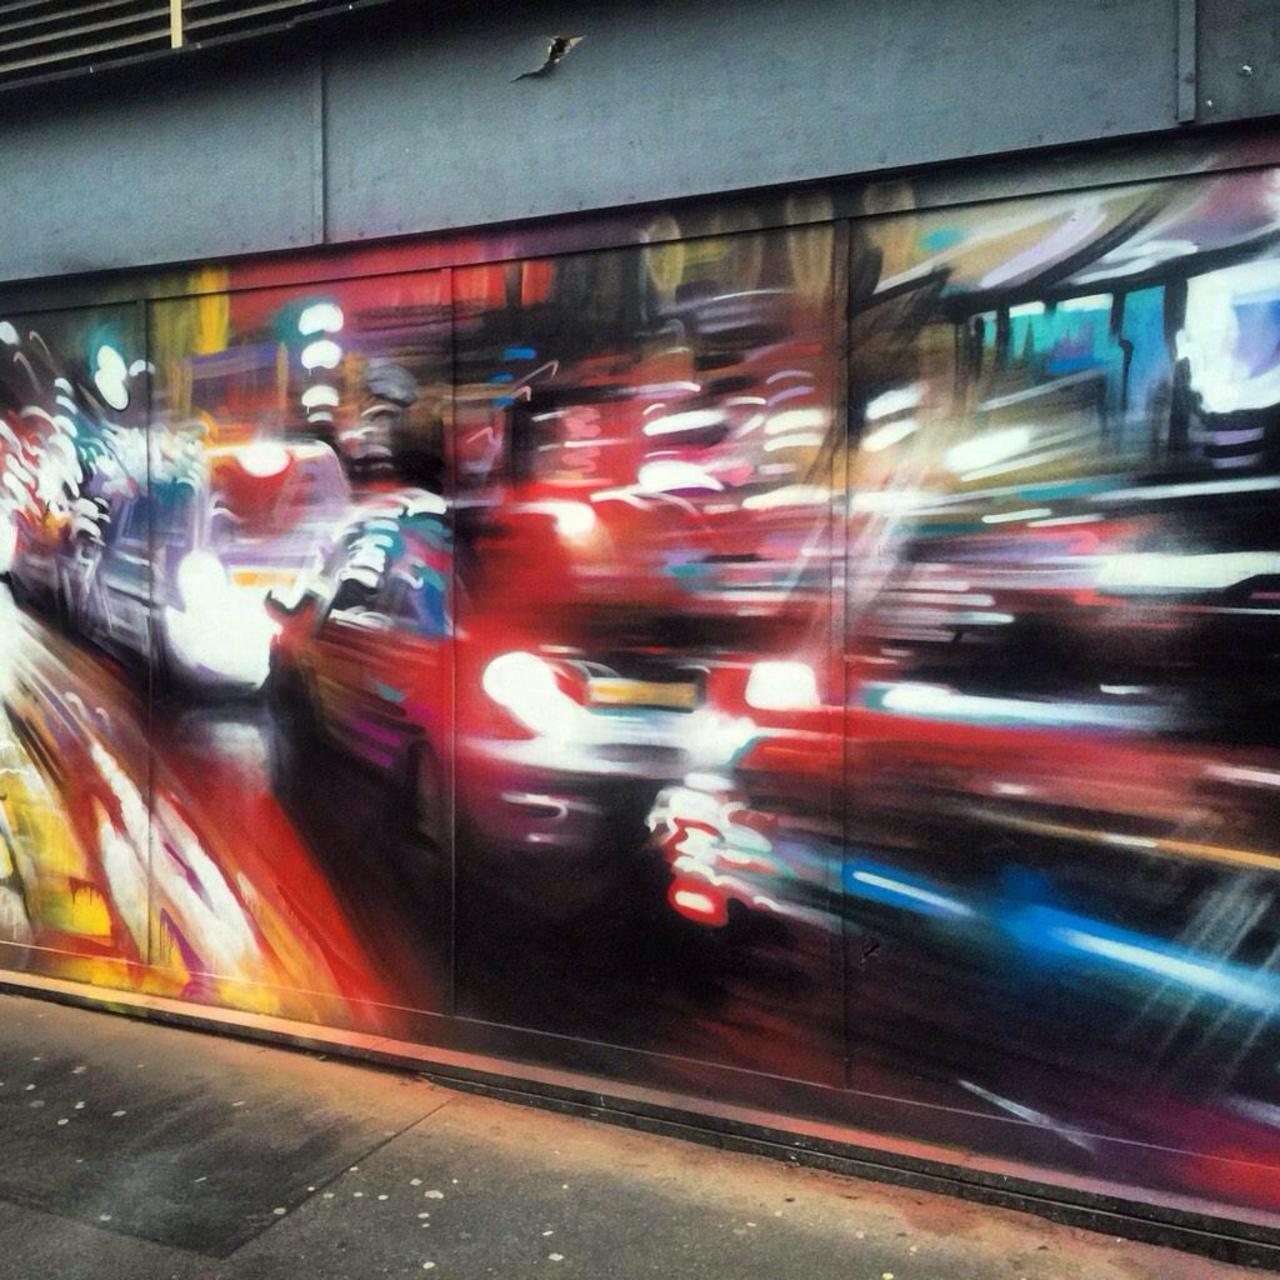 RT GoogleStreetArt "Just completed. 
'Blurred Lines' by Dan Kitchener in Croydon, London

#art #arte #graffiti #st… http://t.co/JWxPEzEk6q"